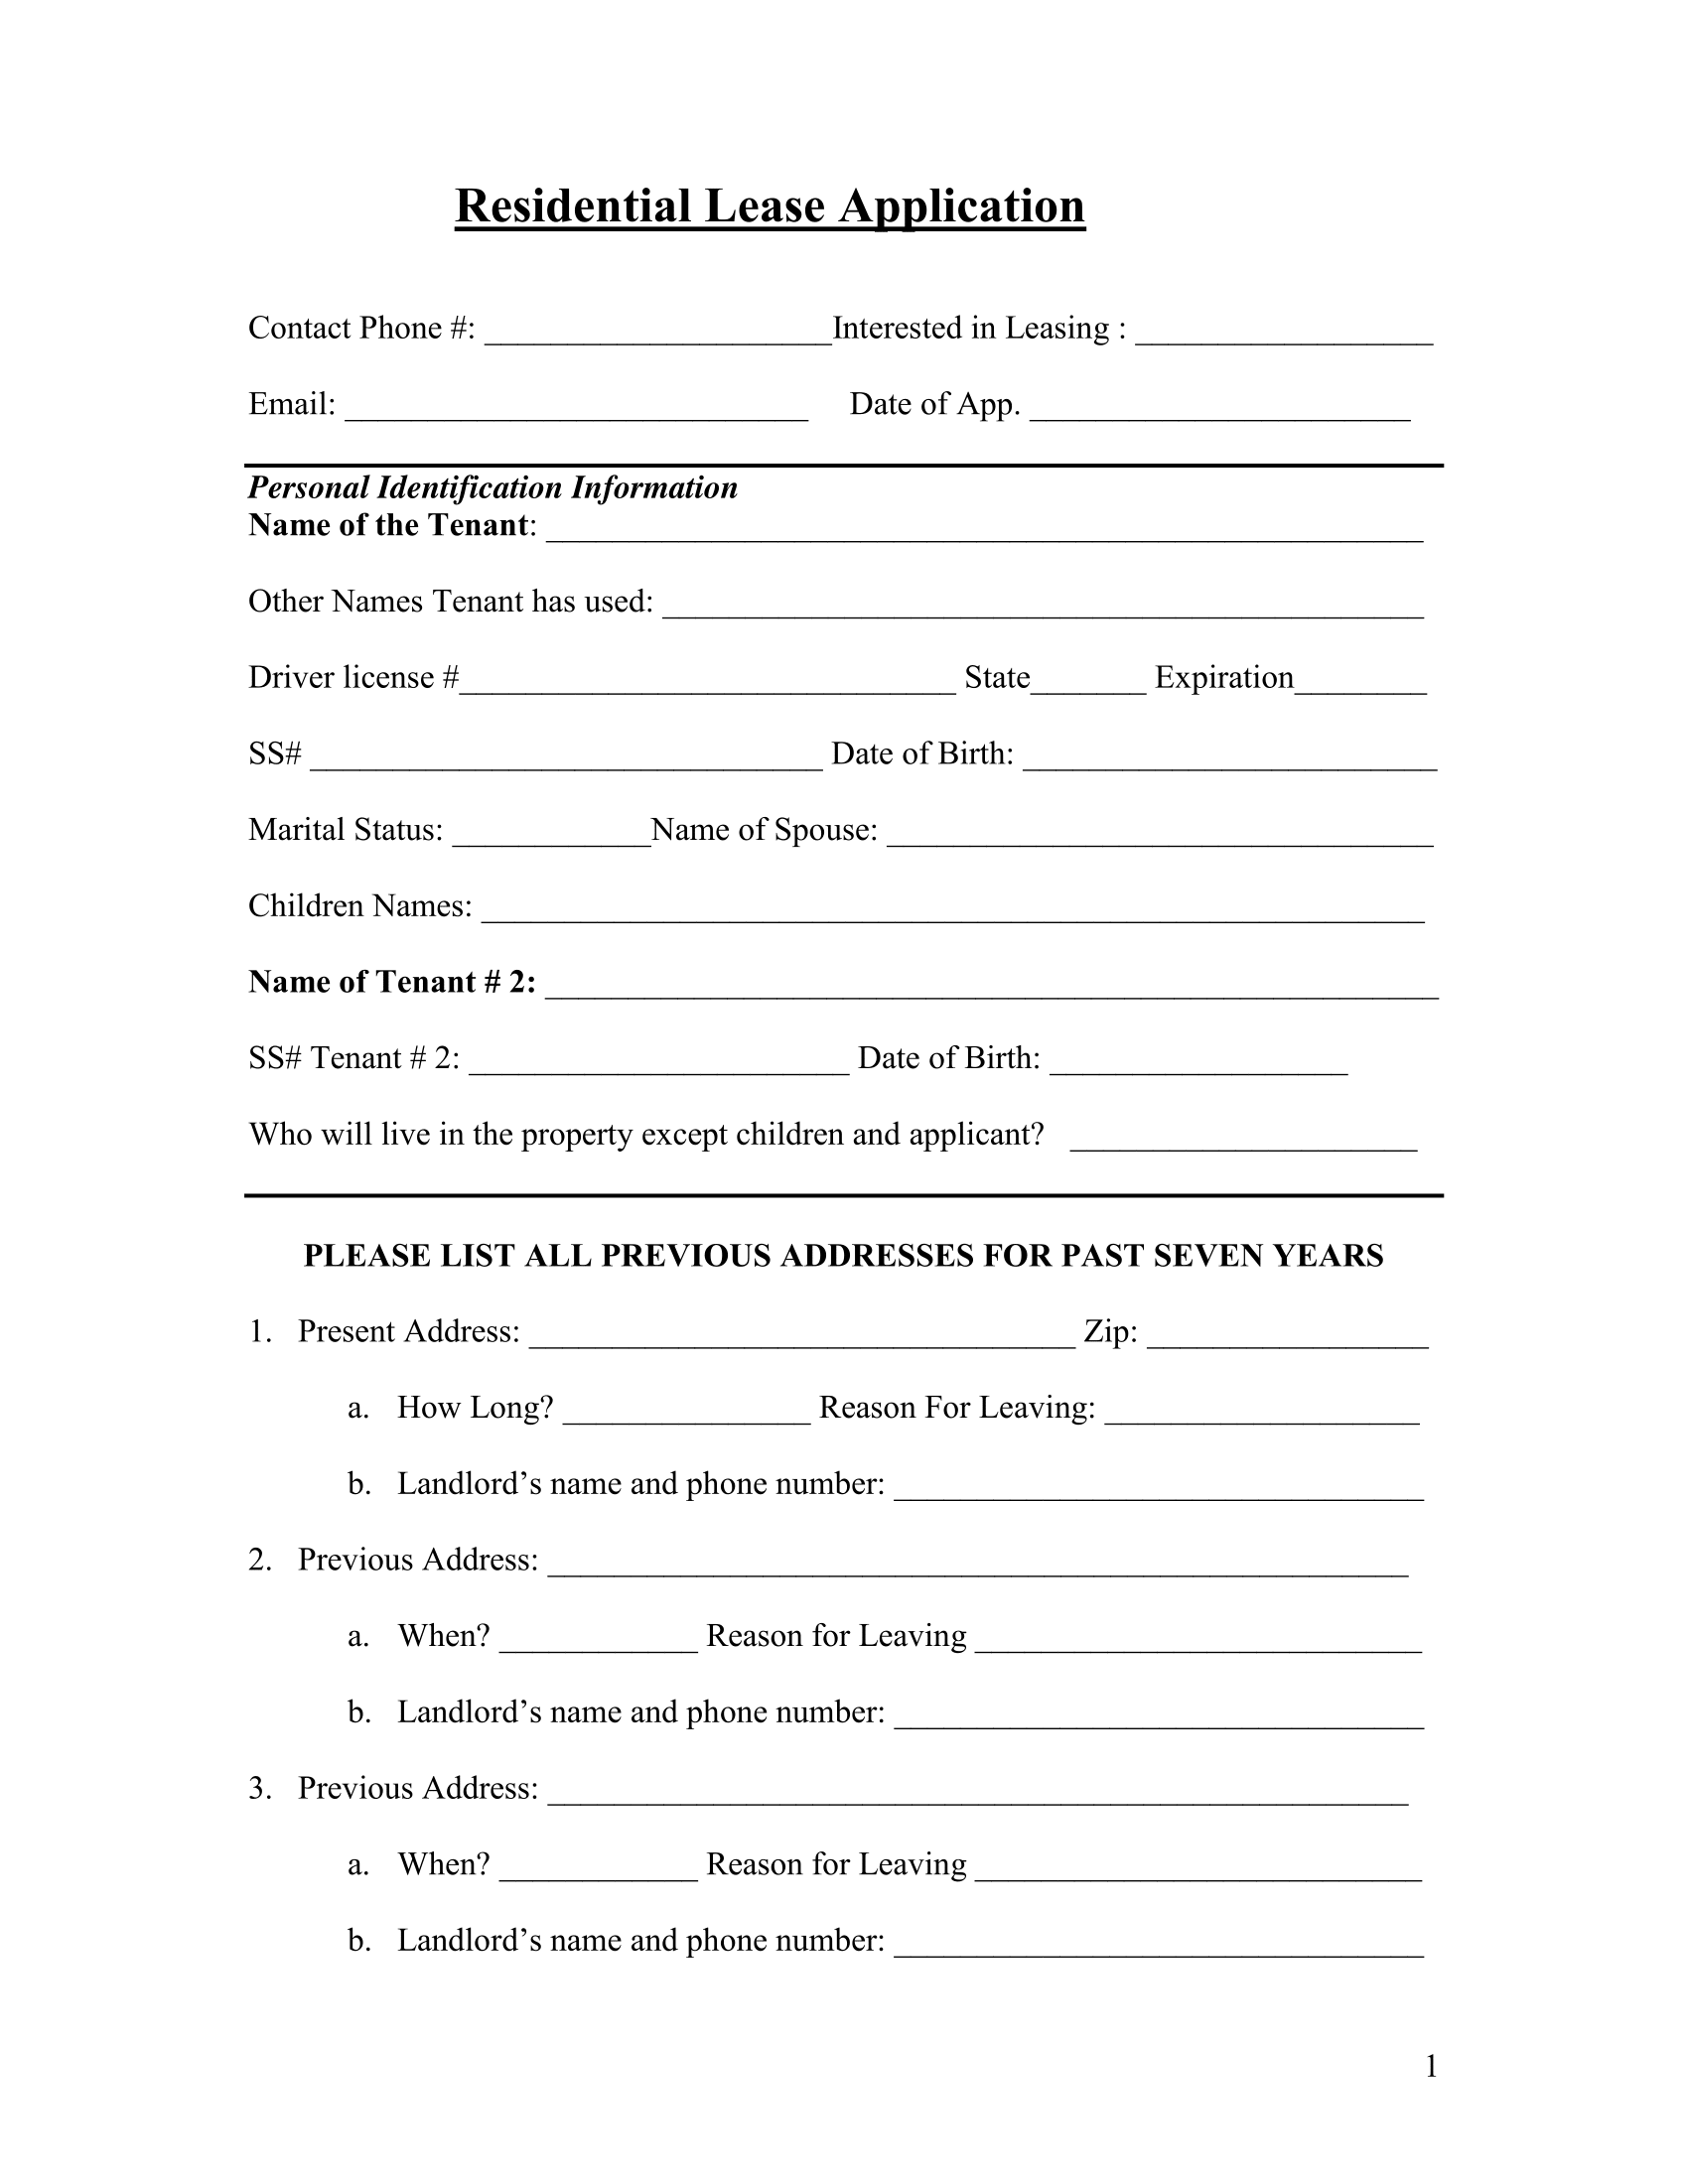 Alabama Rental Application Form – FREE PDF Download